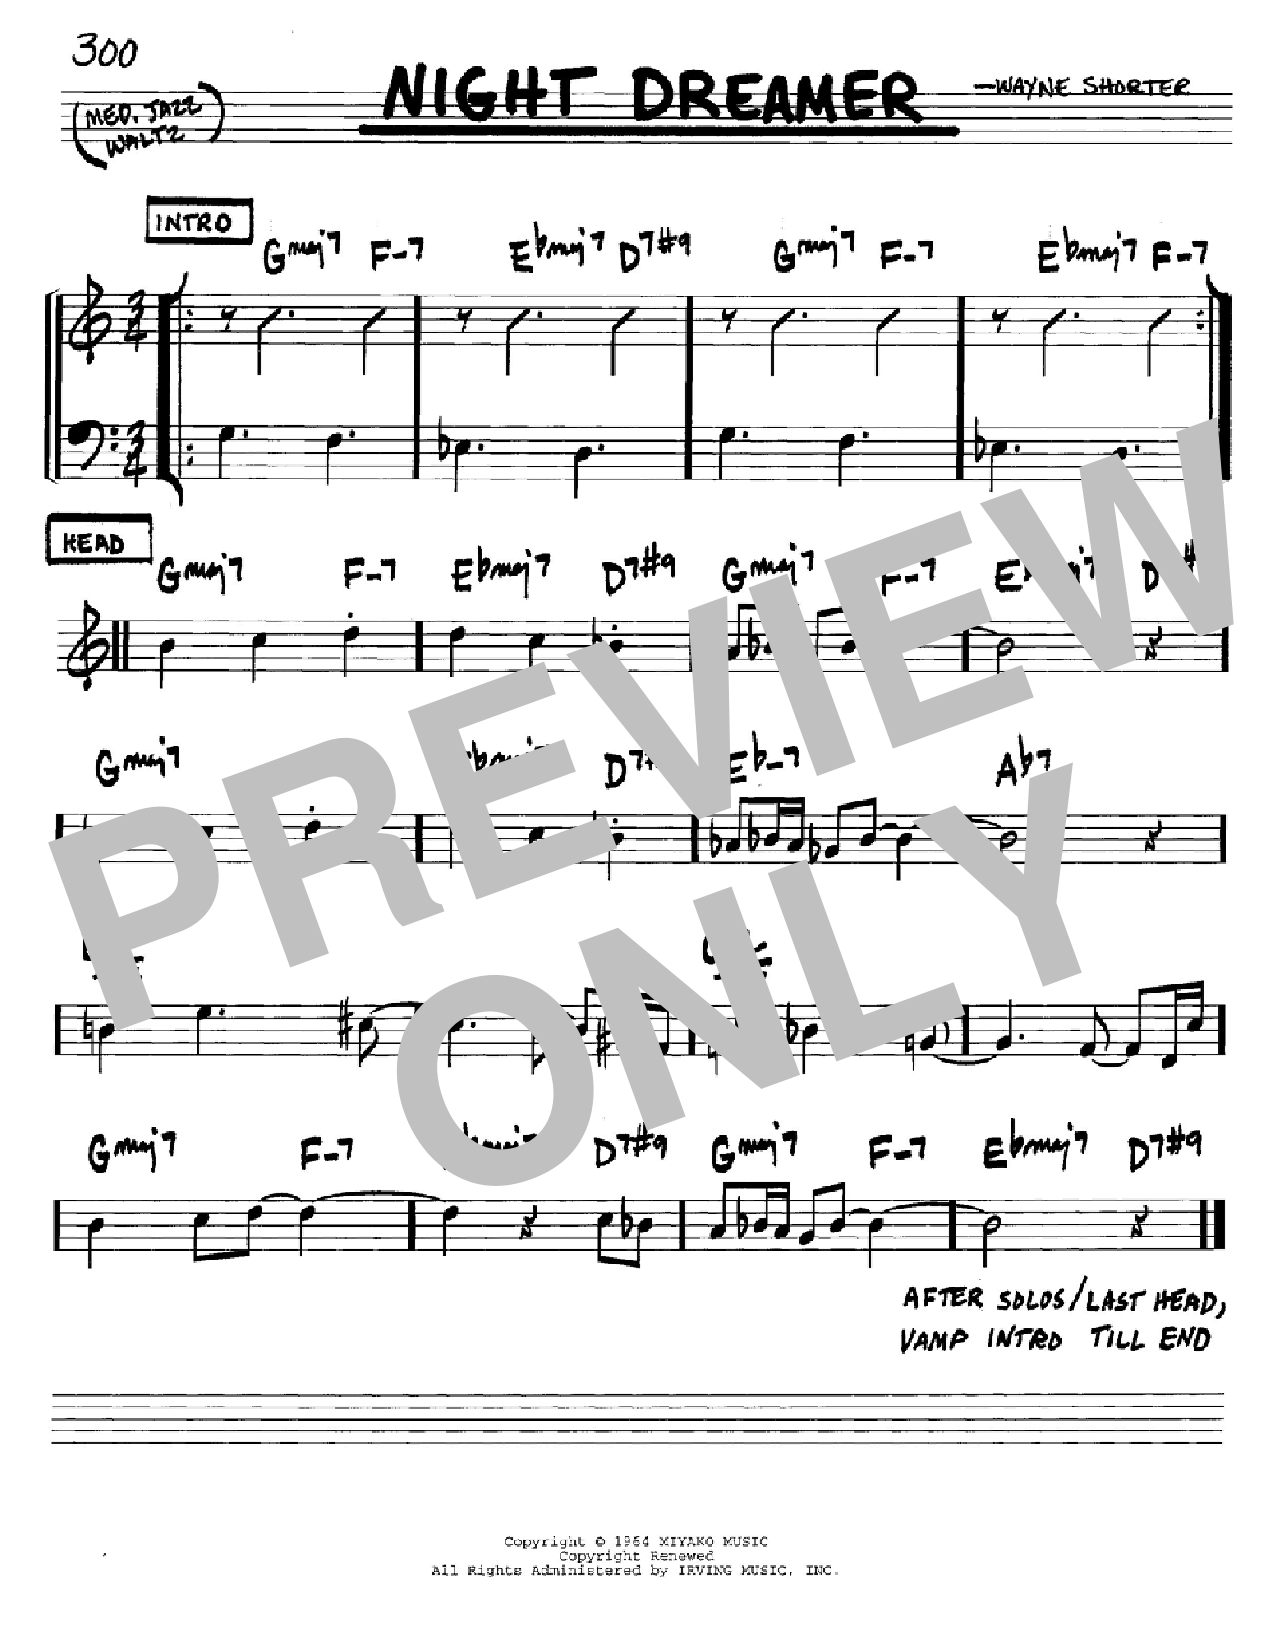 Wayne Shorter Night Dreamer Sheet Music Notes & Chords for Real Book - Melody & Chords - C Instruments - Download or Print PDF